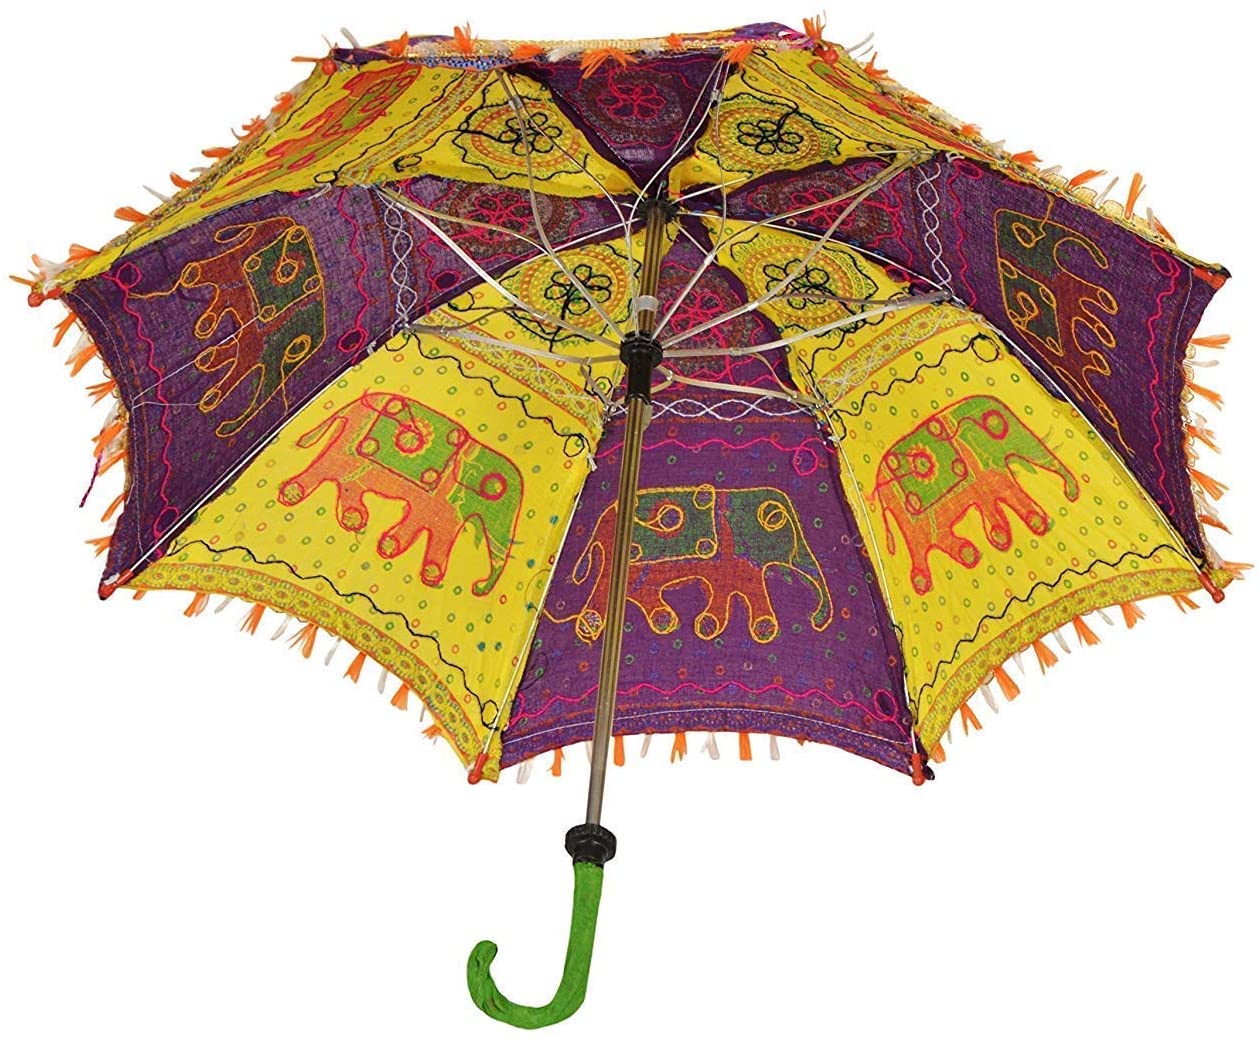 LAMANSH Rajasthani umbrella LAMANSH Elephant Print Embroidery Work Decorative Wedding Umbrella | Gujrati Umbrella | Rajasthani Umbrella, Useful for Party Decoration, Home Decor, Pre Wedding, Garba, Photoshoot / Backdrop Event Decoration Umbrella